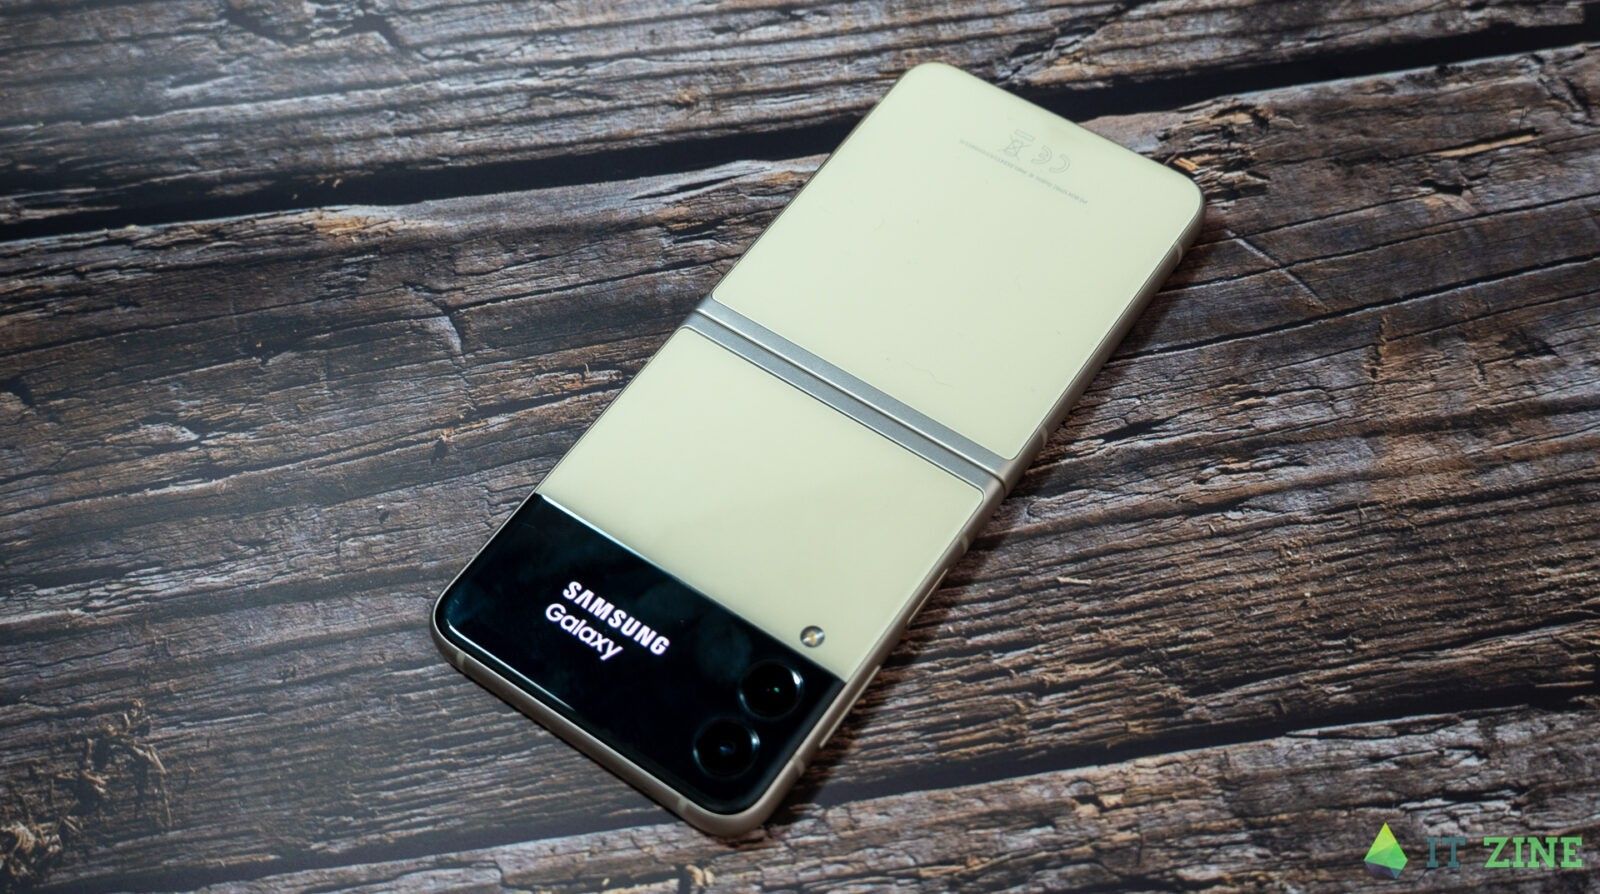 Samsung Galaxy Z Flip 3 First Look